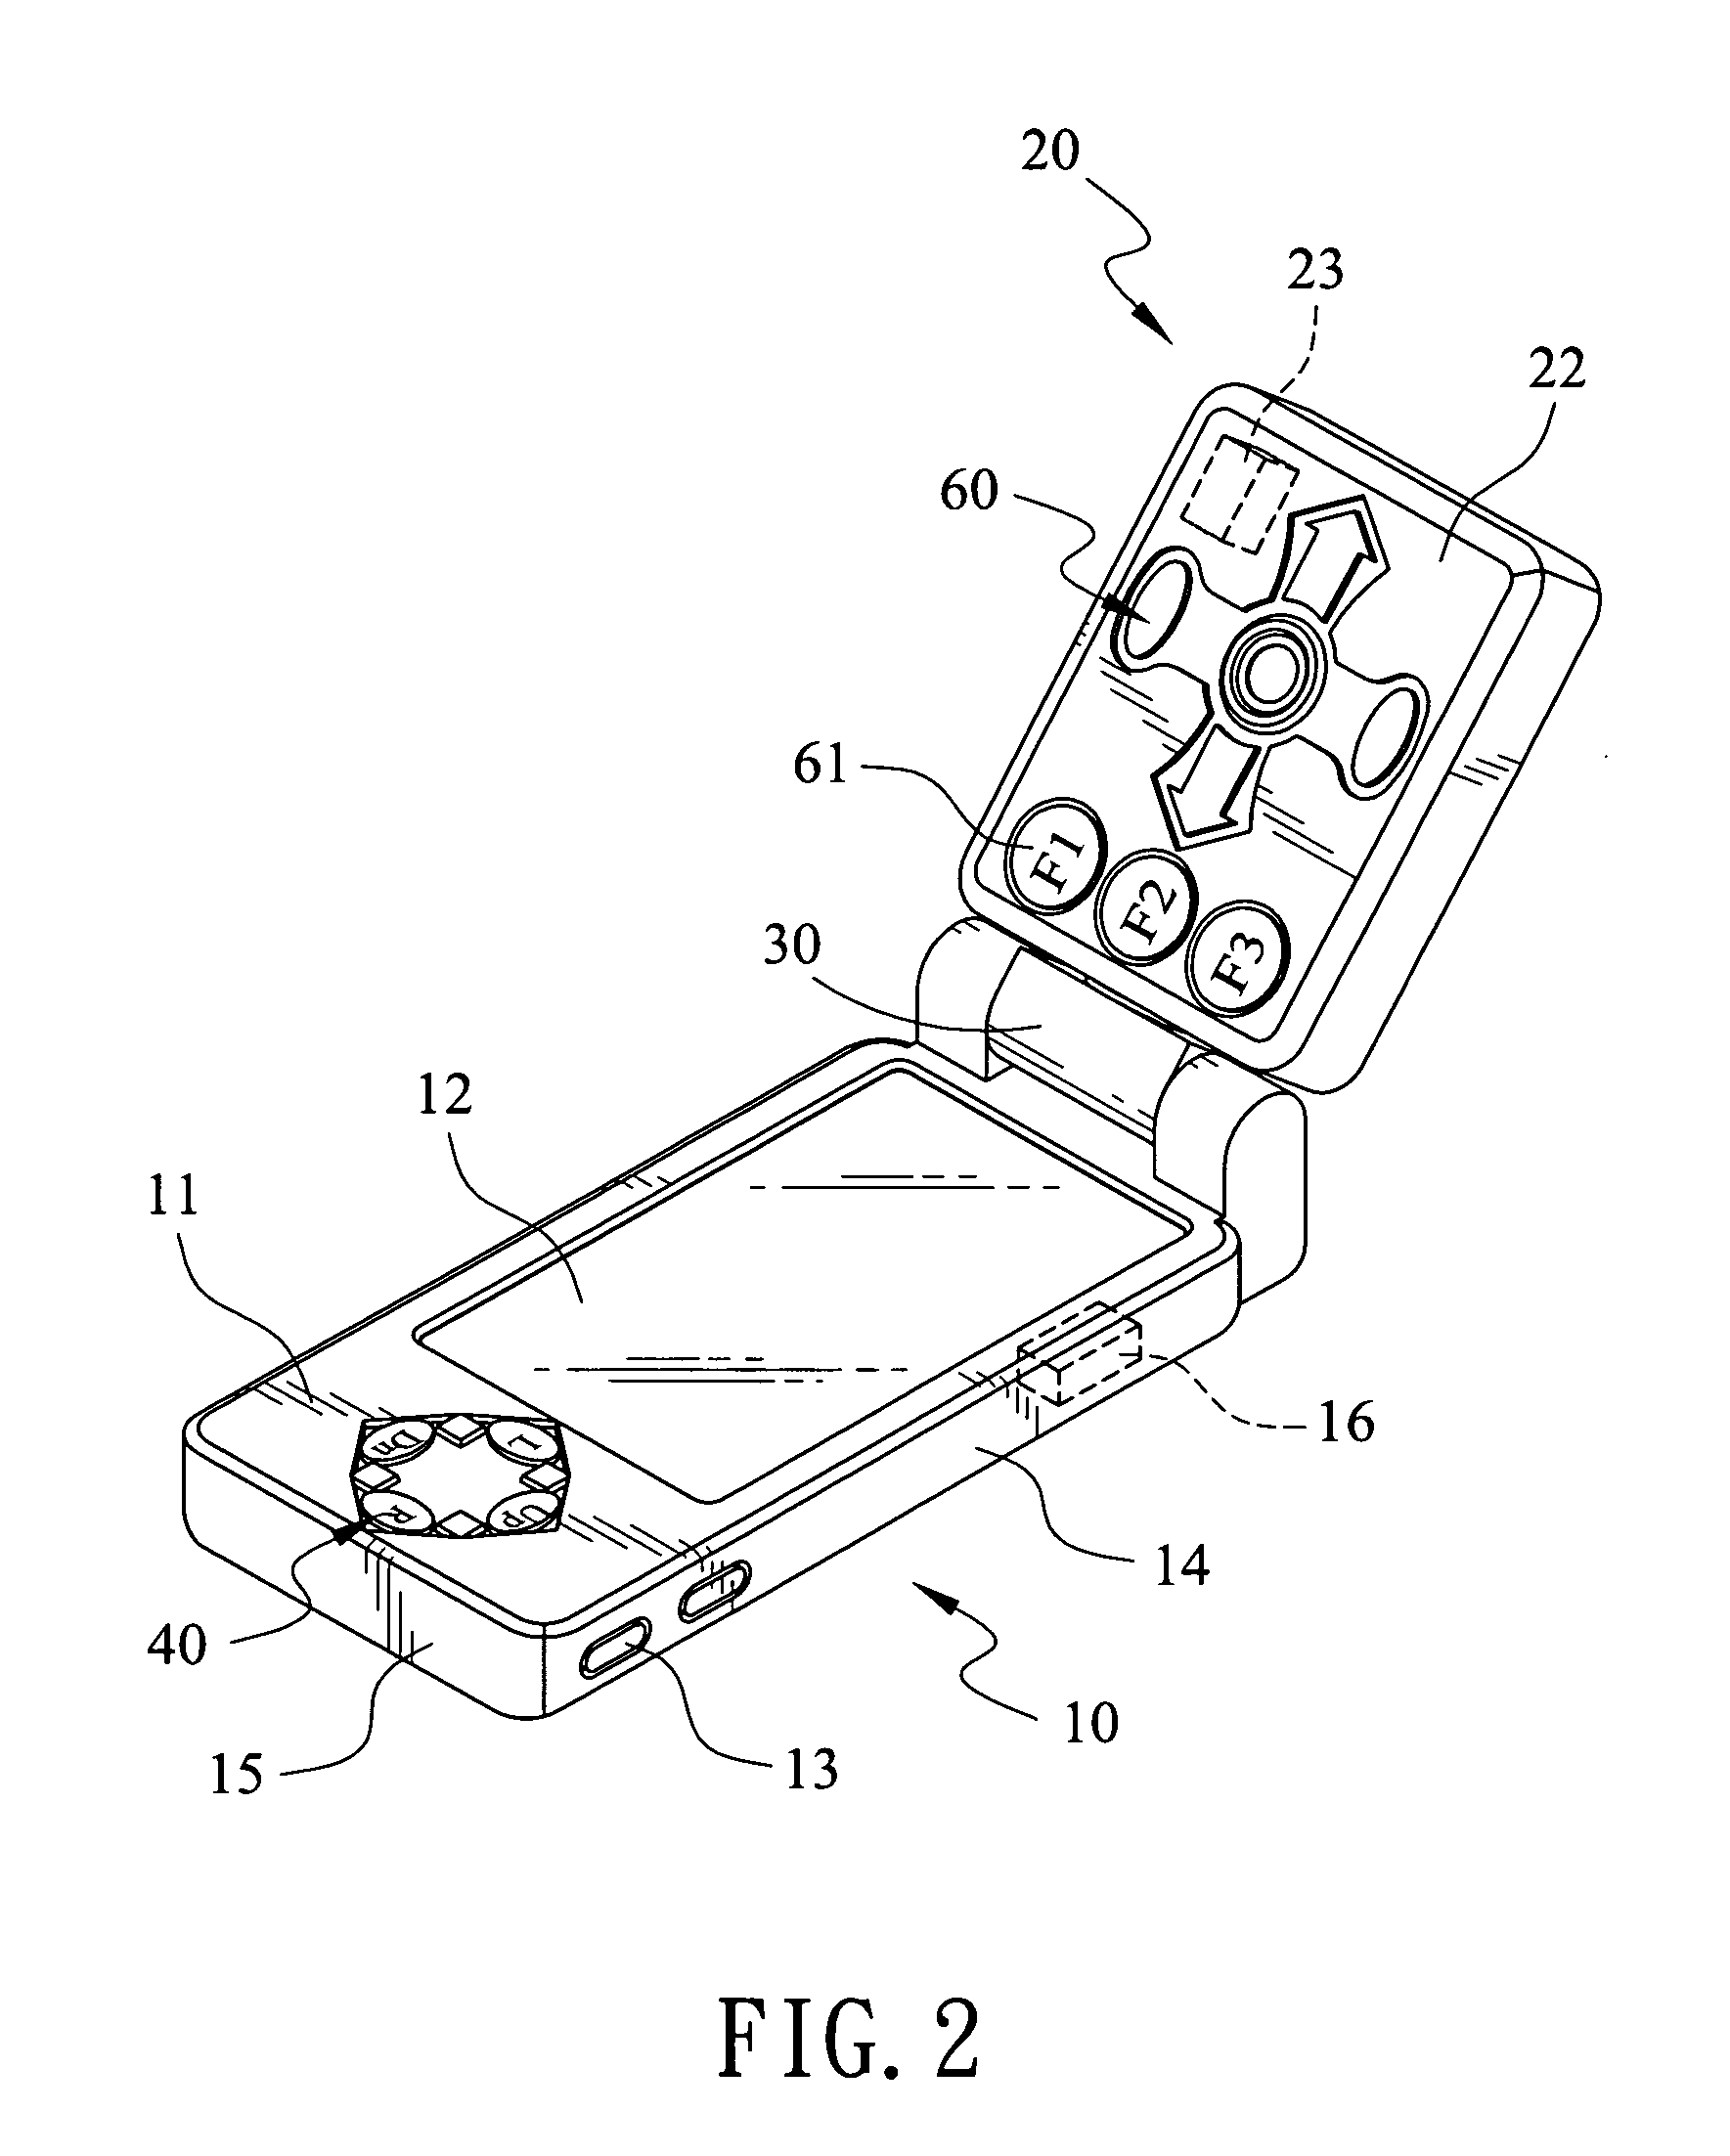 Portable communication apparatus